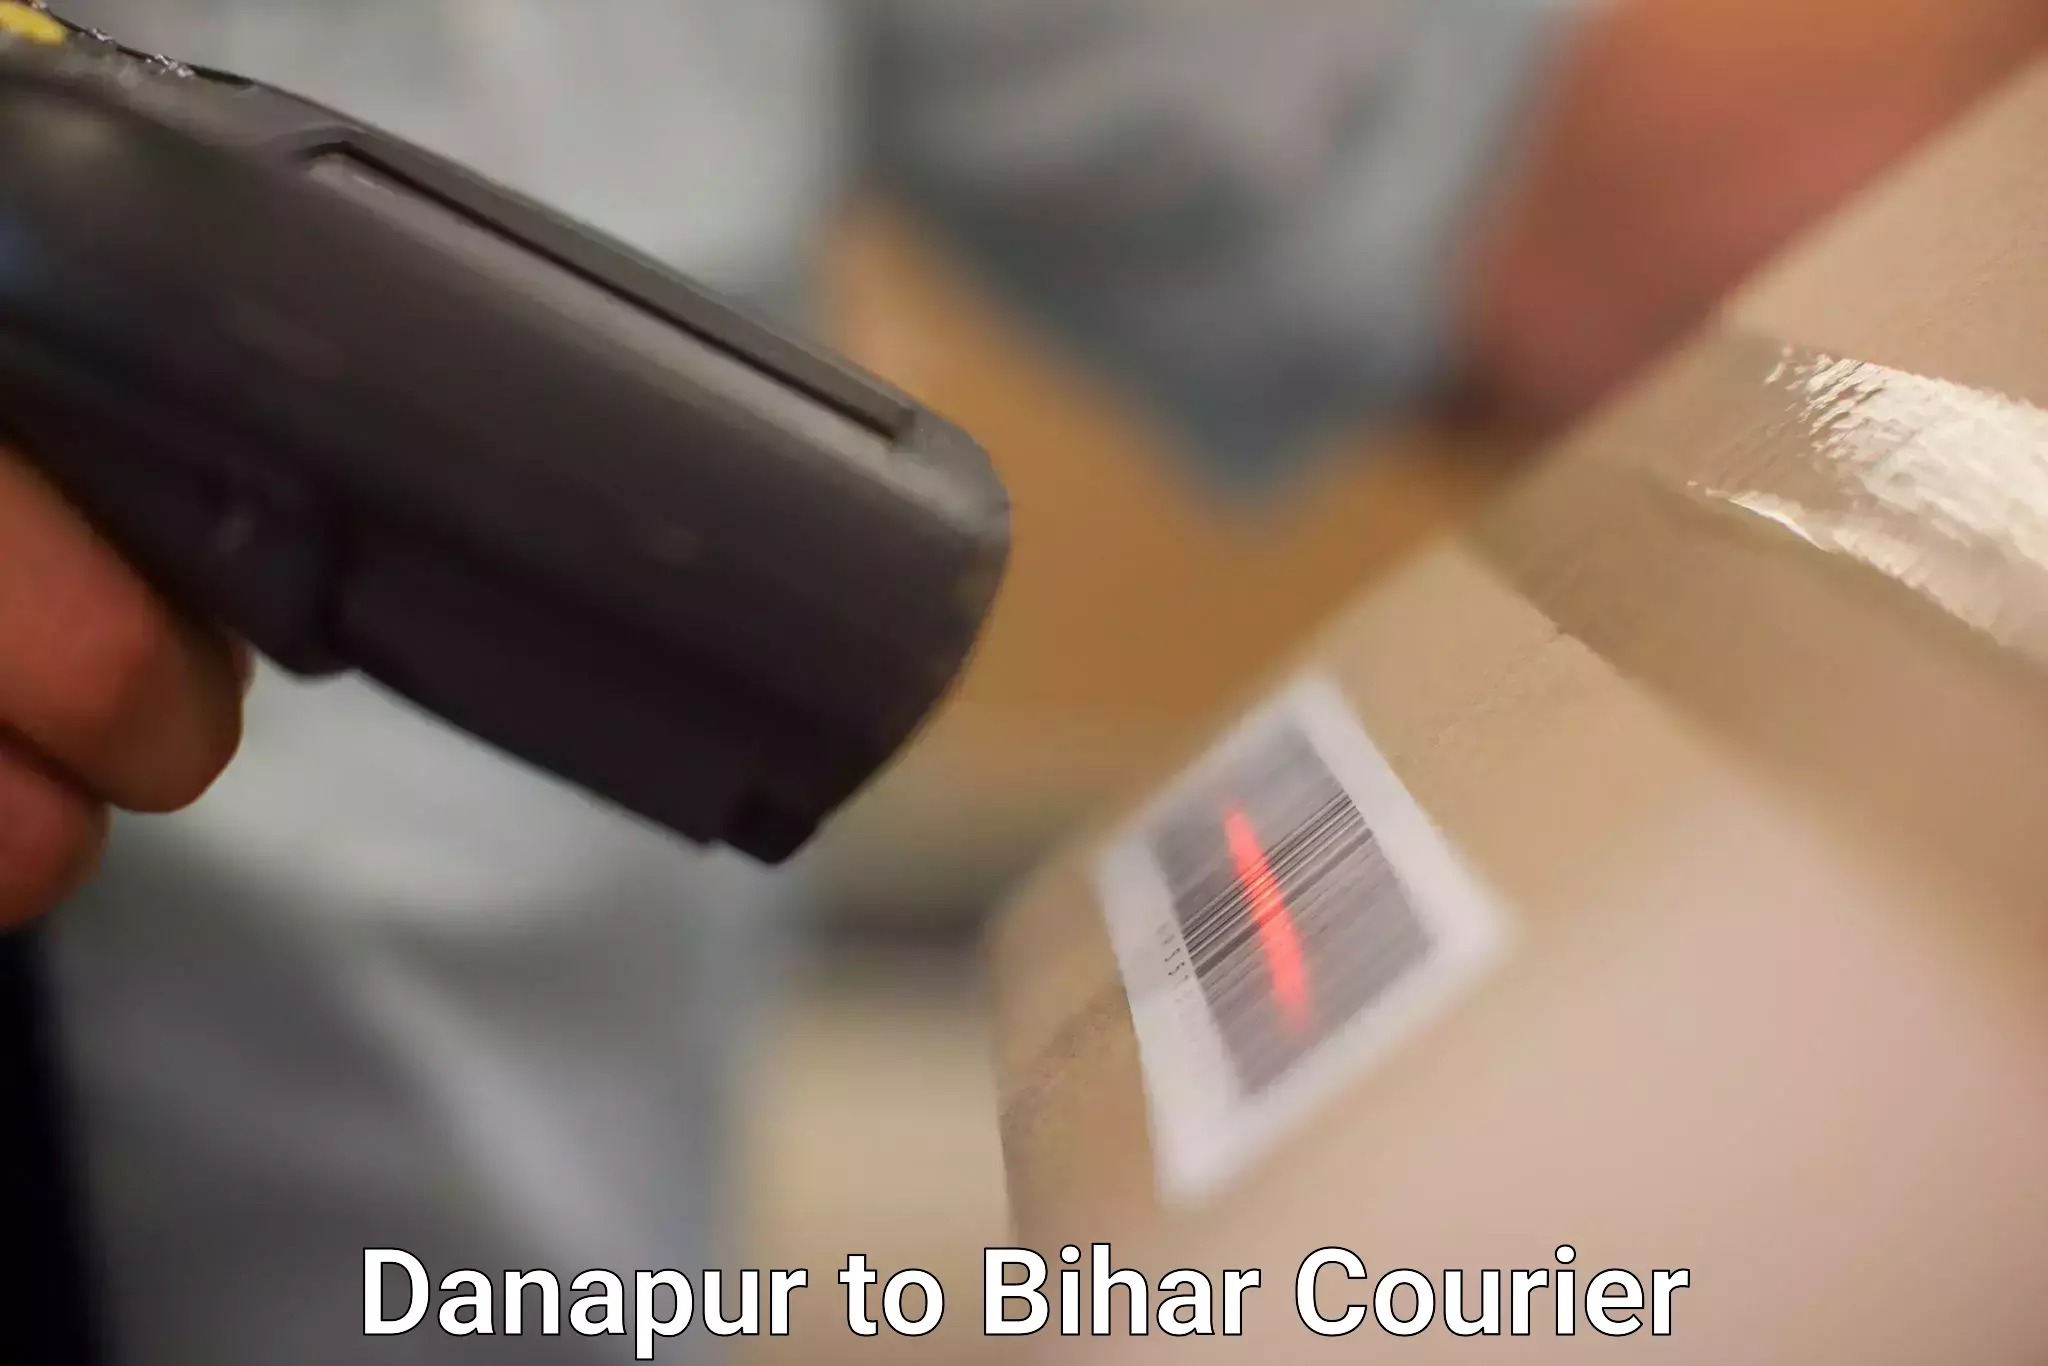 International parcel service Danapur to Sandesh